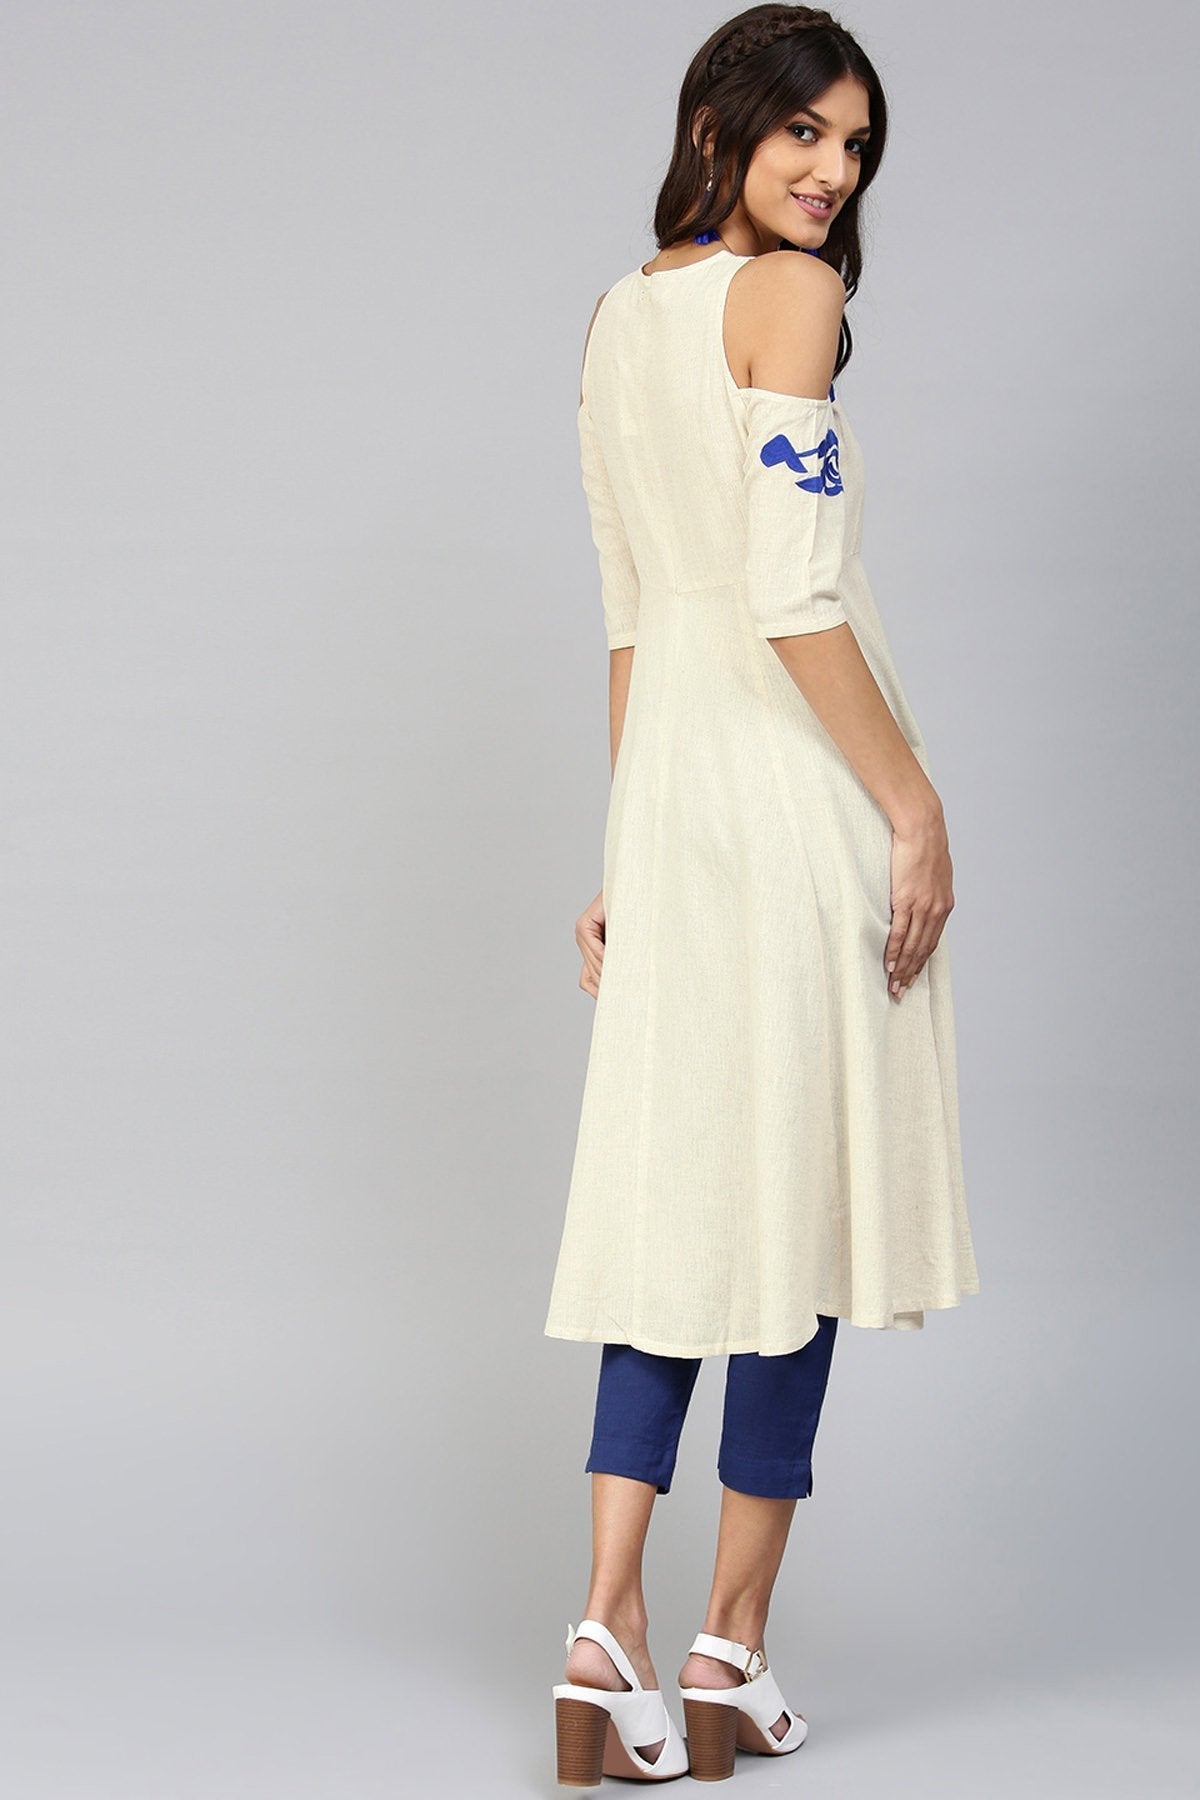 Women's Cold Shoulder Embroidered Off-White Anarkali - SHAE